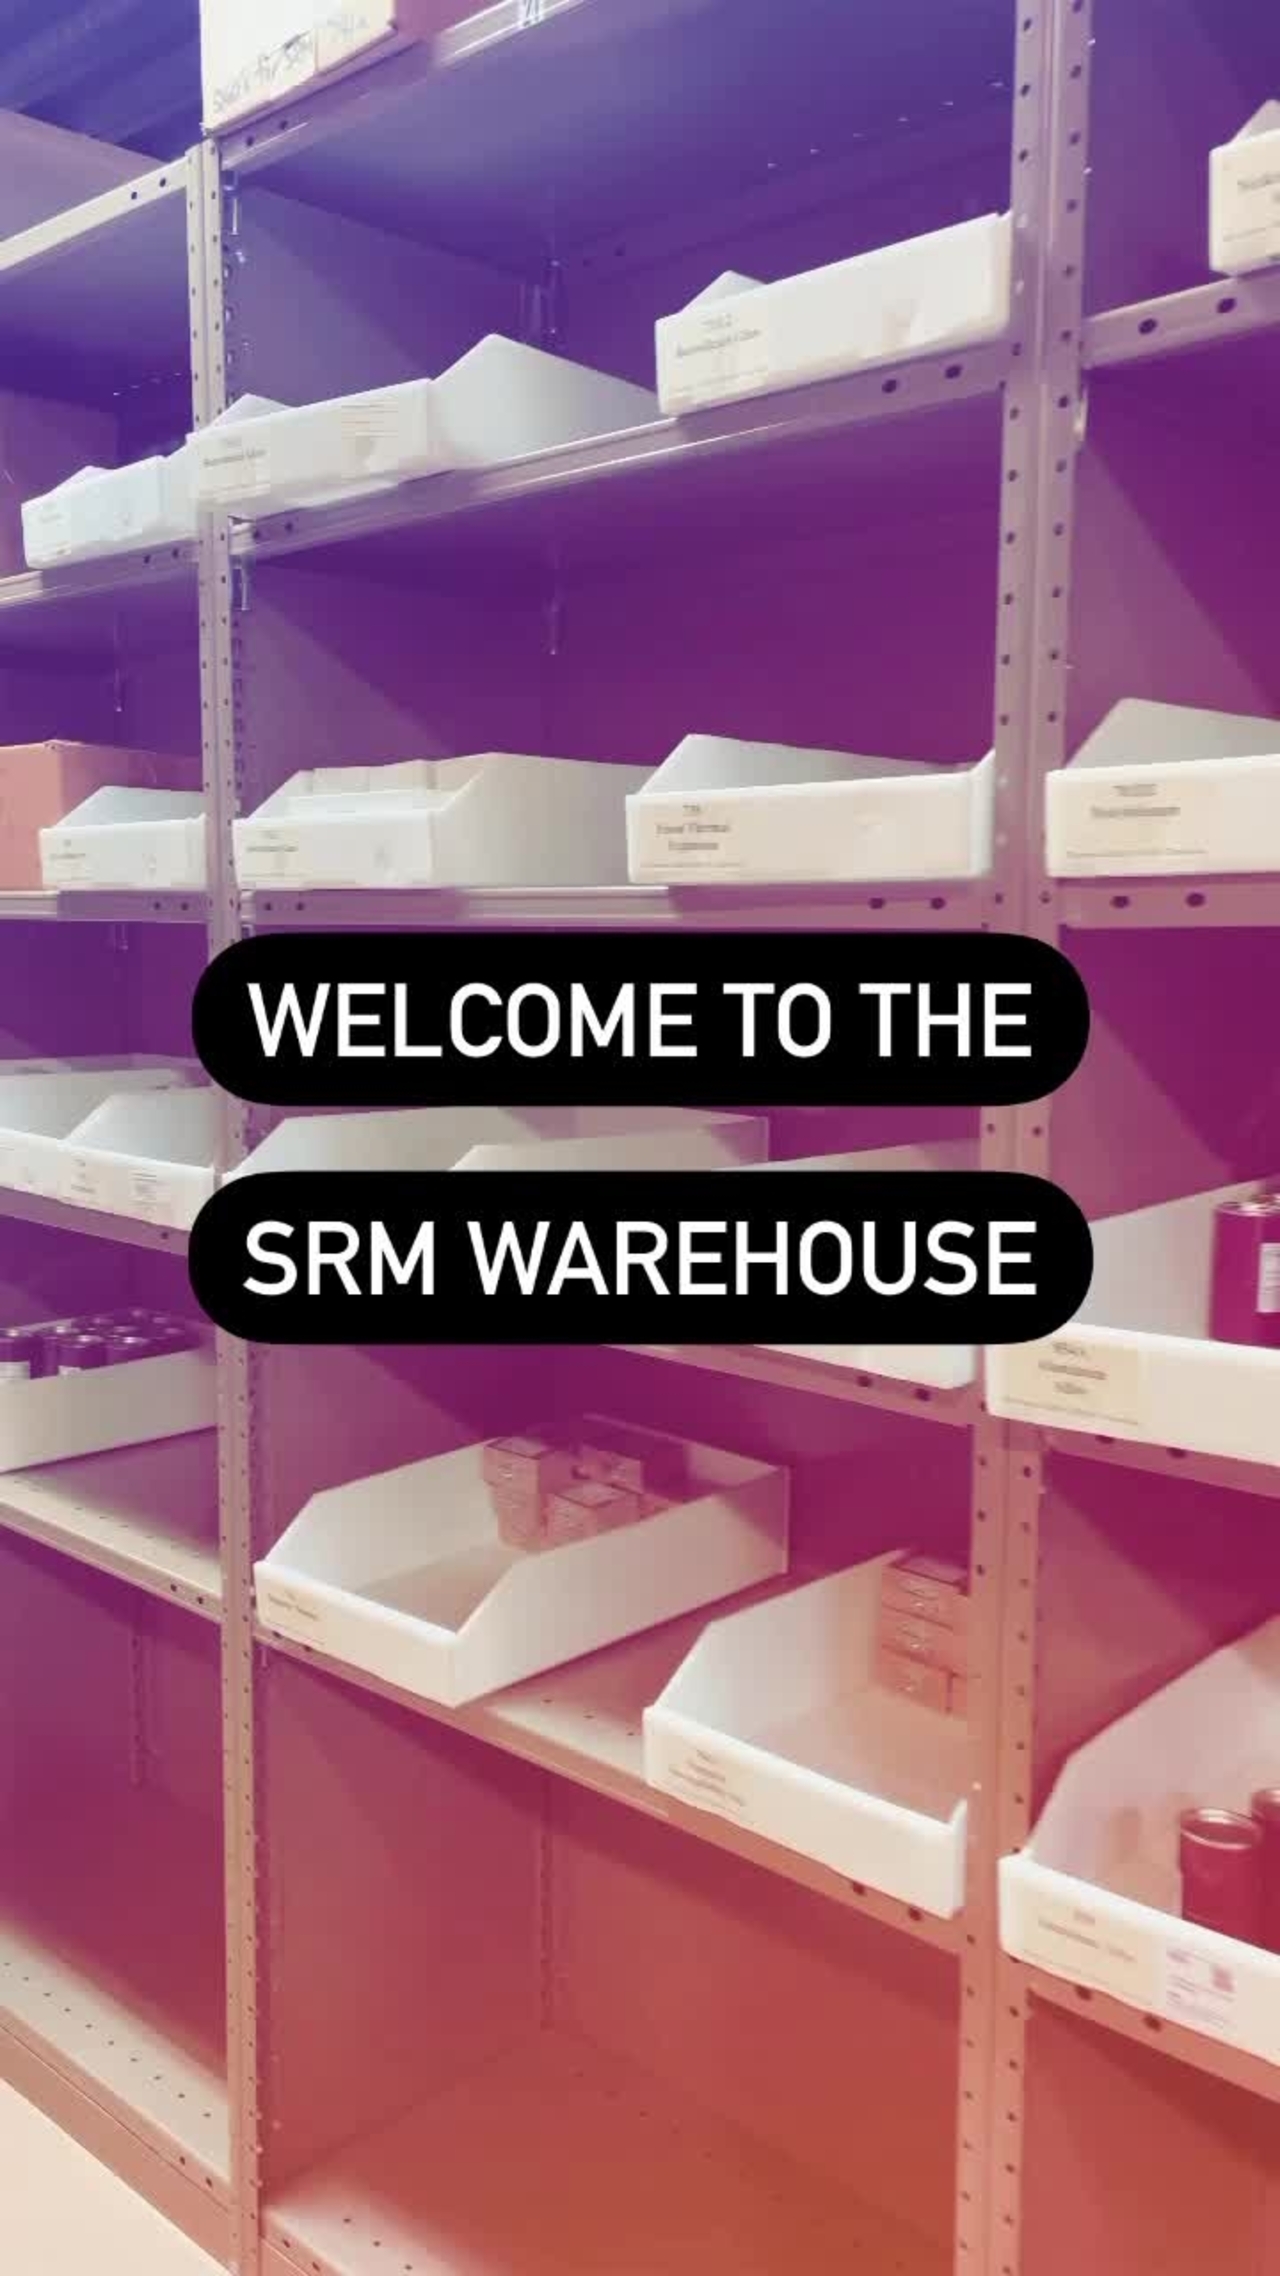 Inside the SRM Warehouse